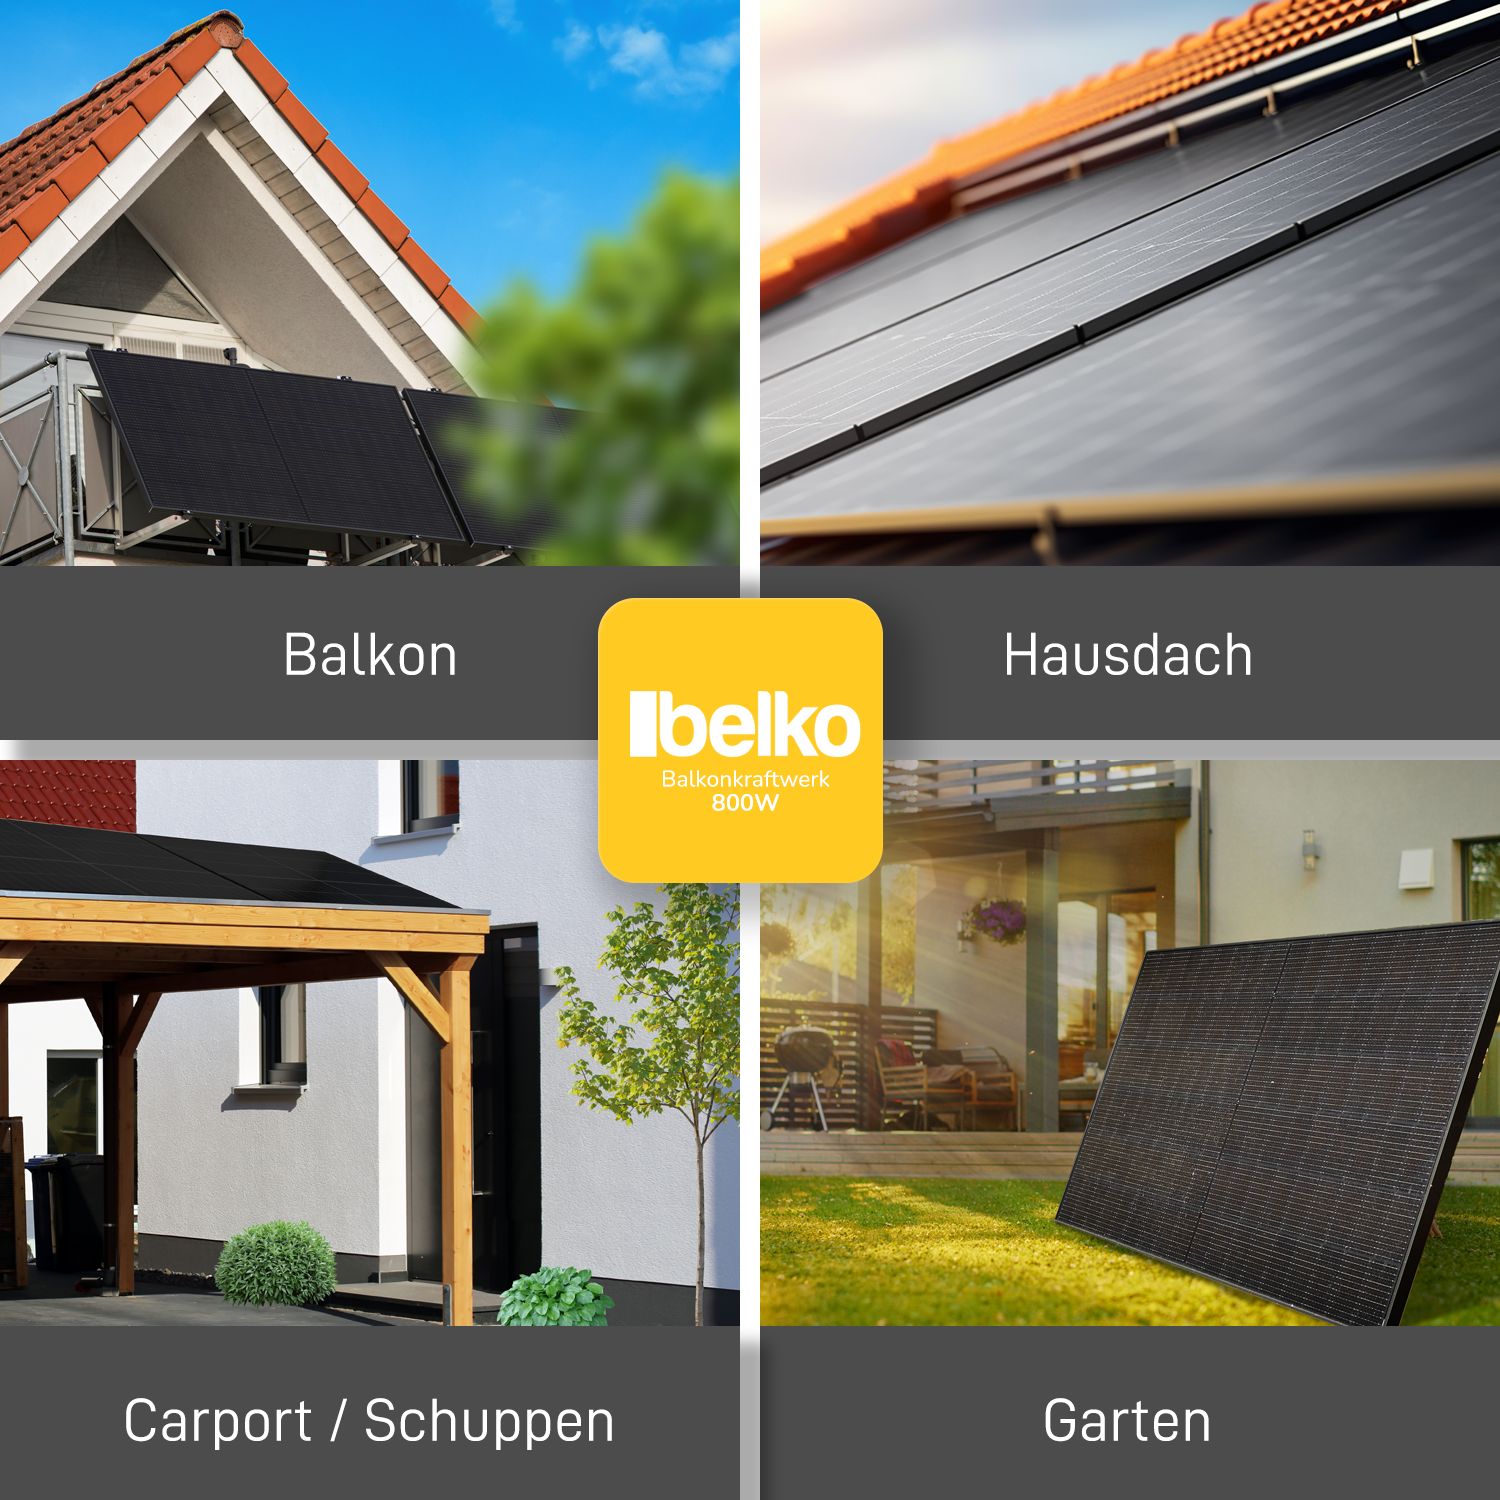 Belko® Balkonkraftwerk 830Wp Komplettset, 2 x 415W Trina Solar Full Black Module, 800W Wechselrichter mit WiFi